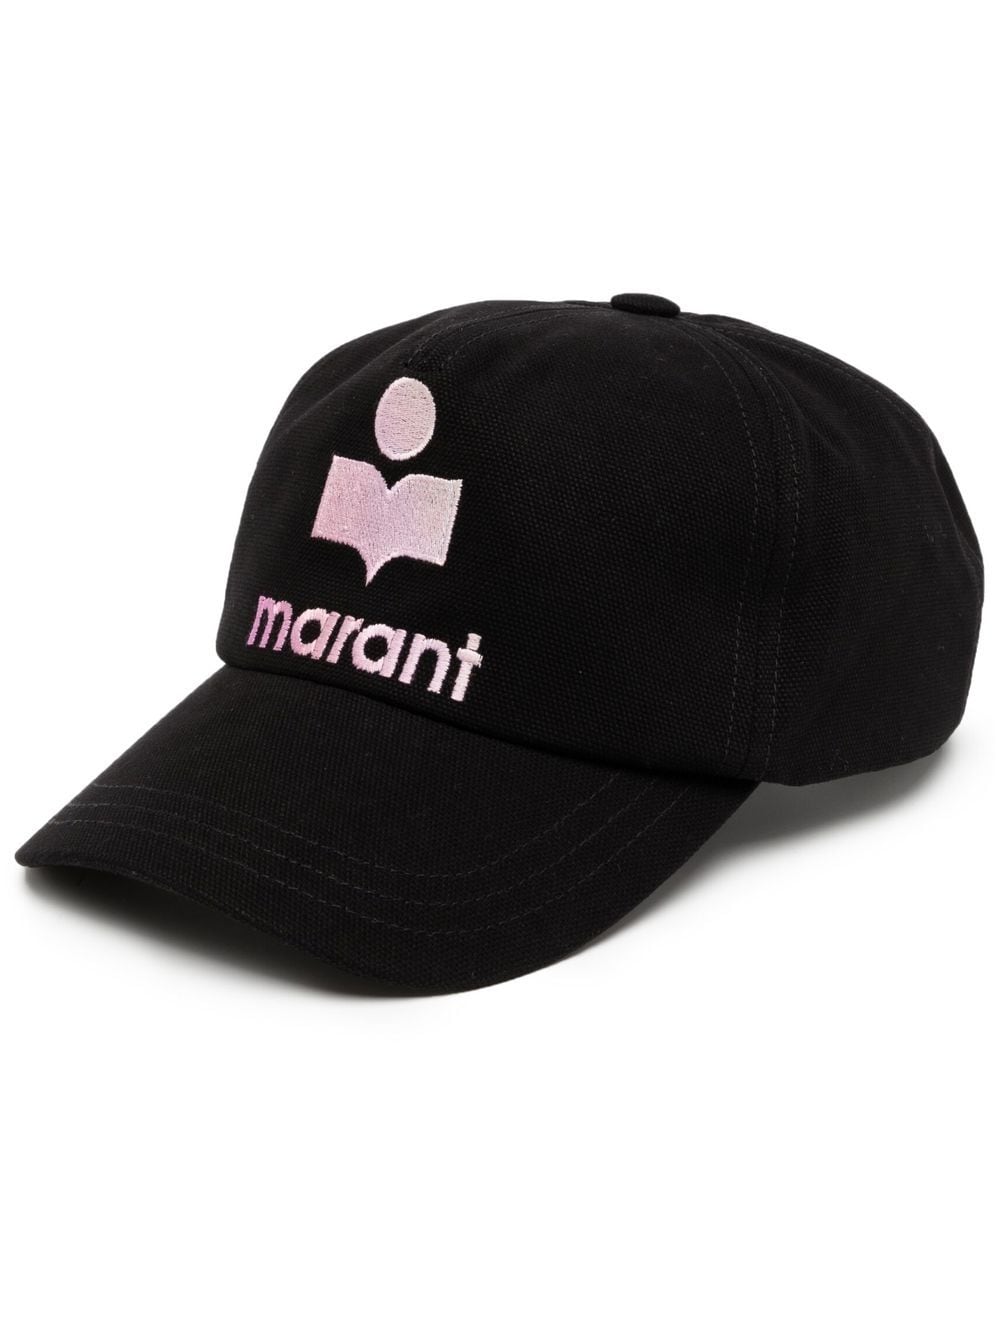 Shop Isabel Marant Embroidered-logo Baseball Cap